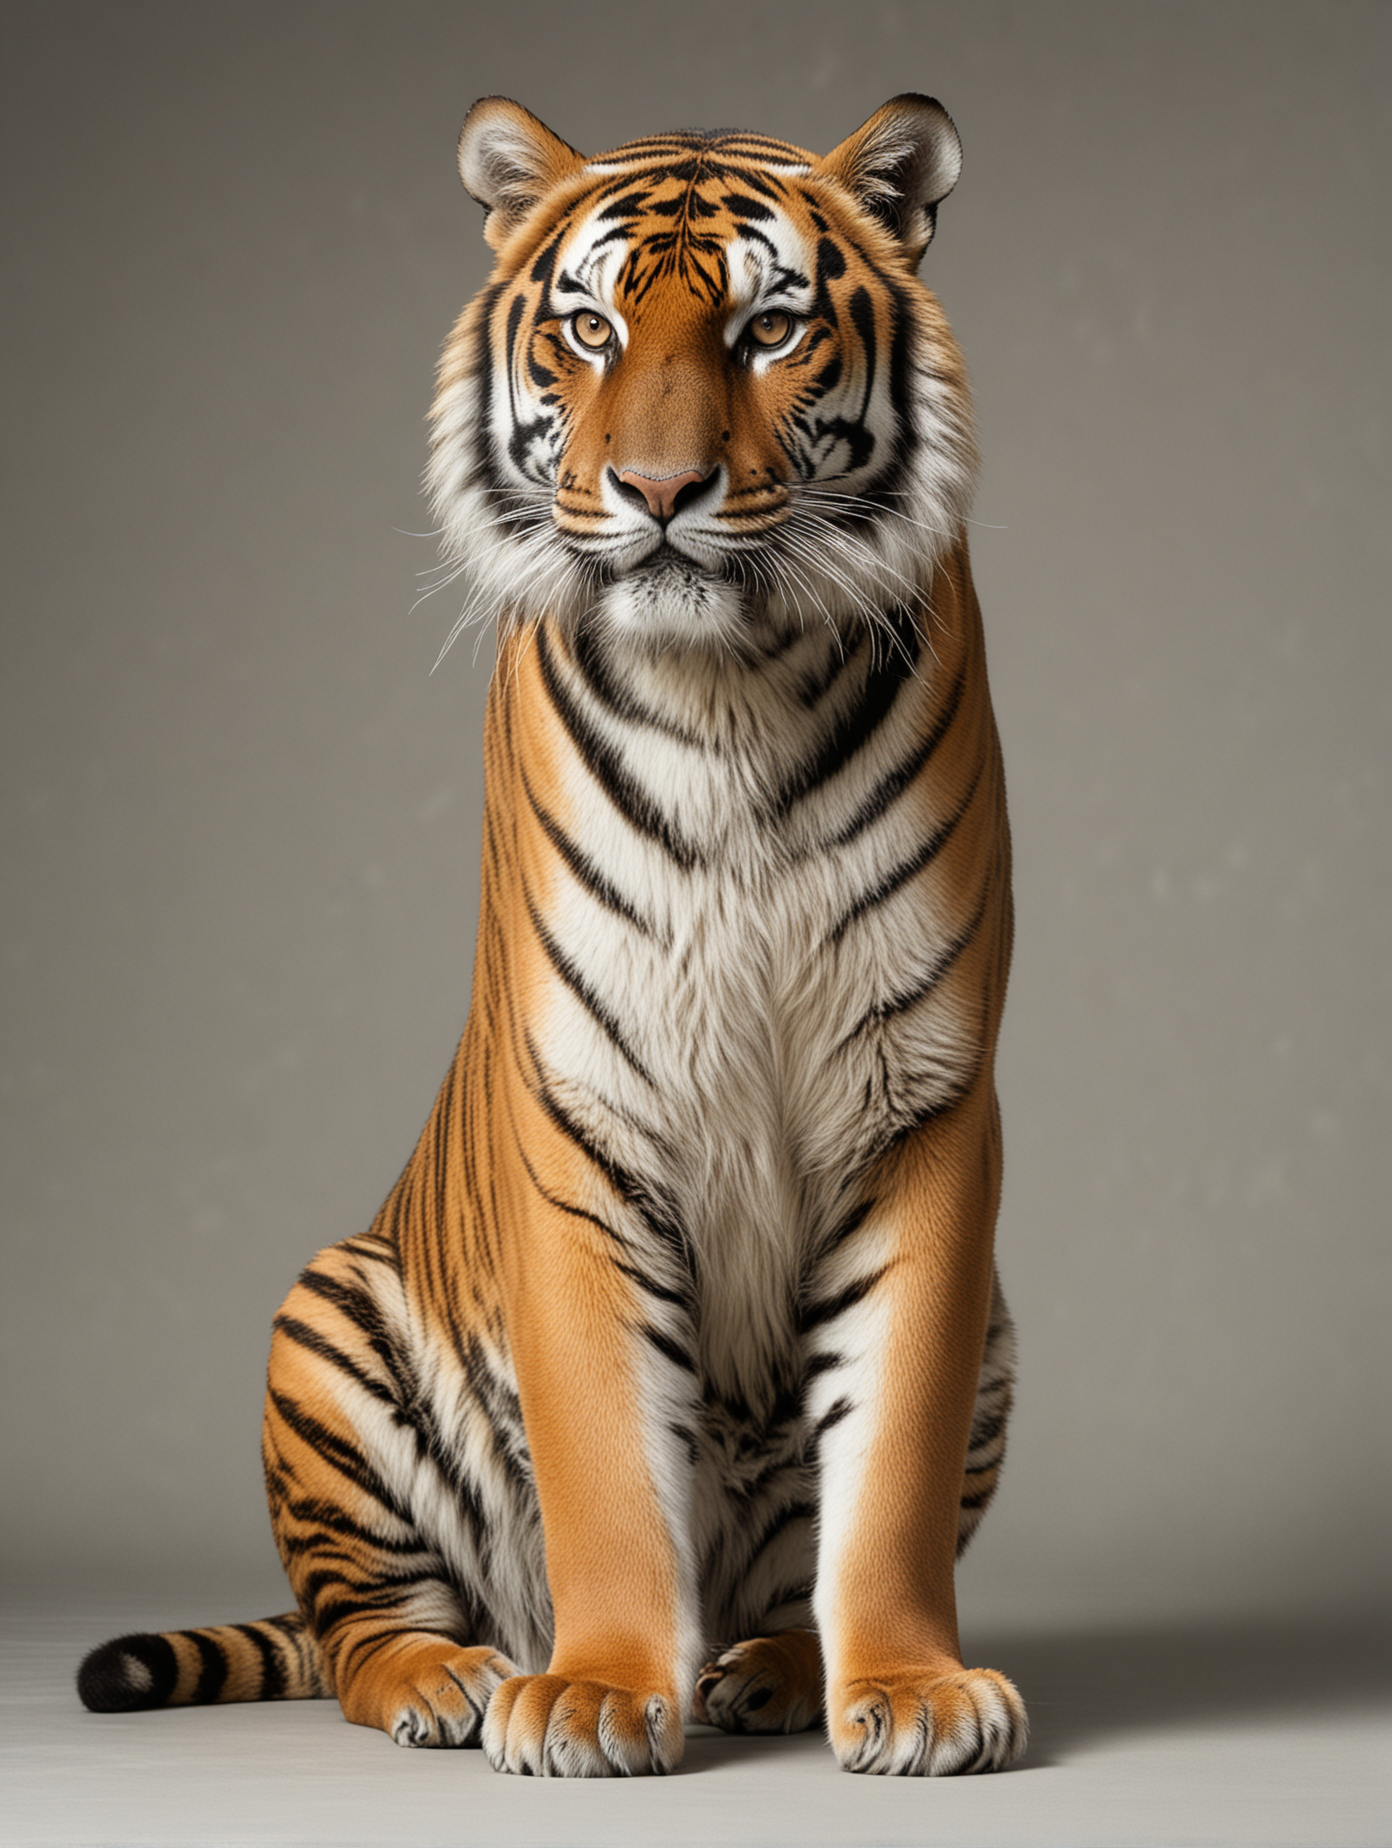 full body studio photo of tiger sitting, slightly angled view.